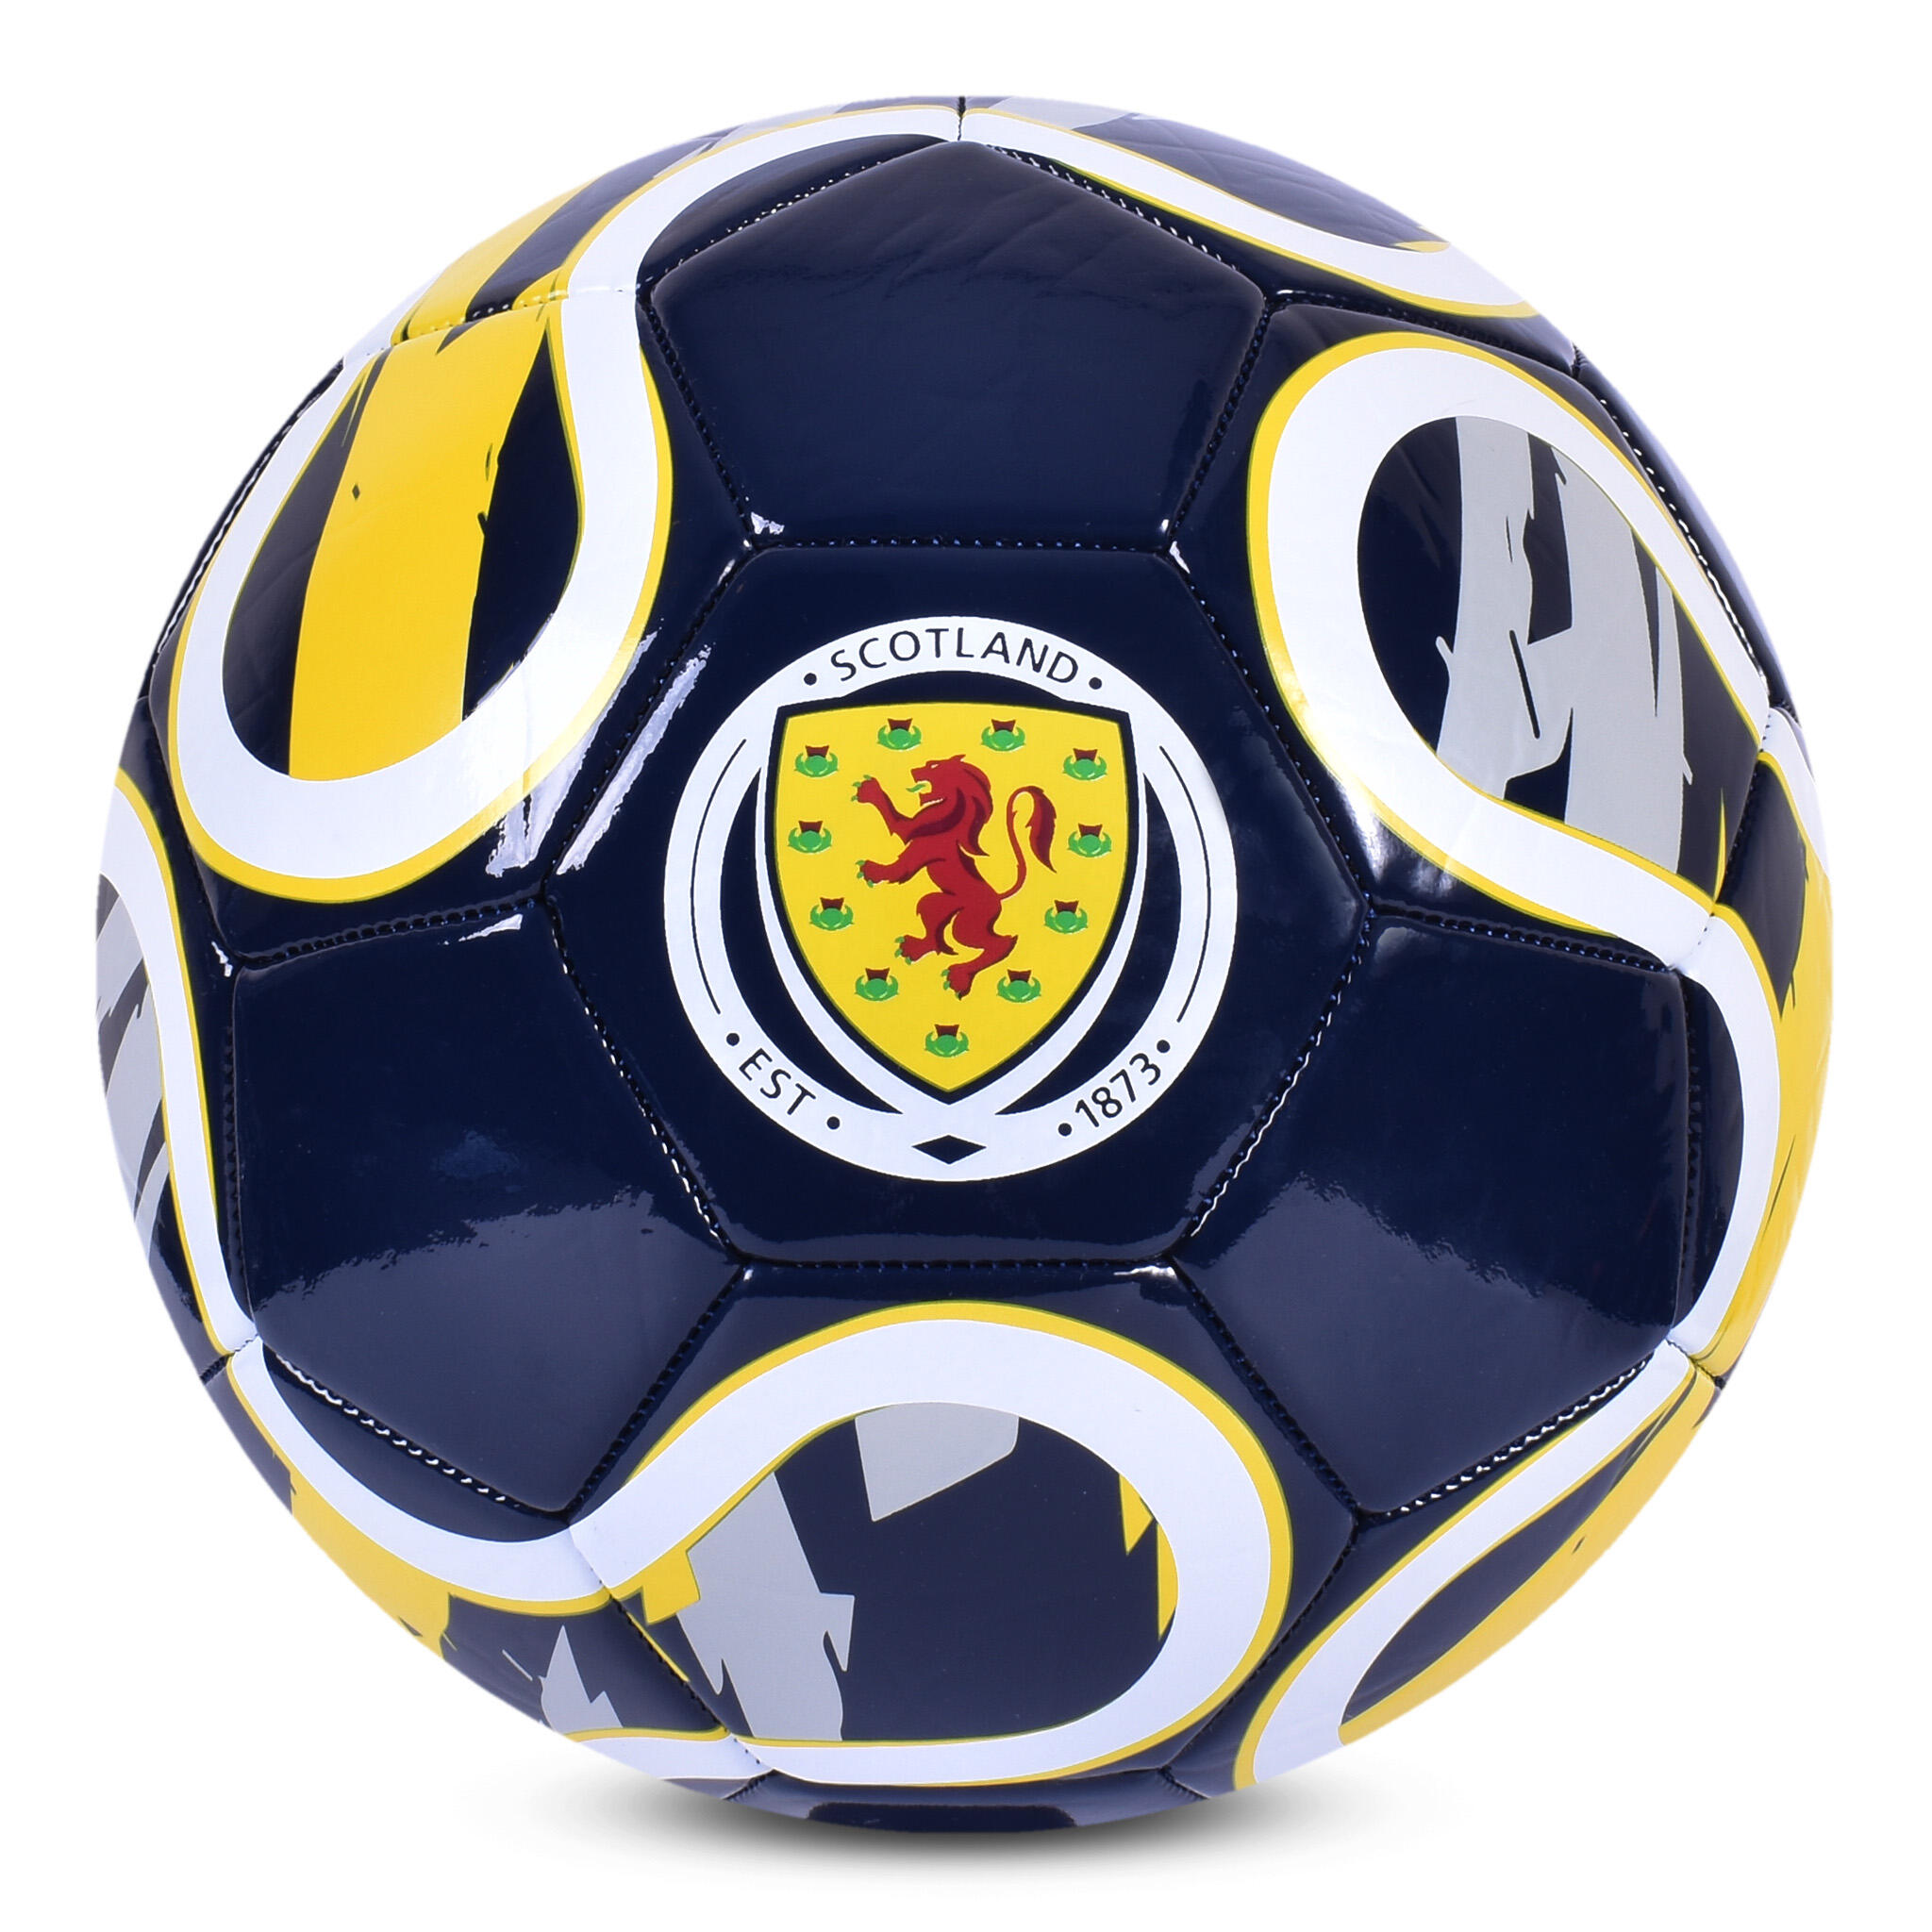 HY-PRO Scotland Supporter Football Size 5 Blue Yellow White